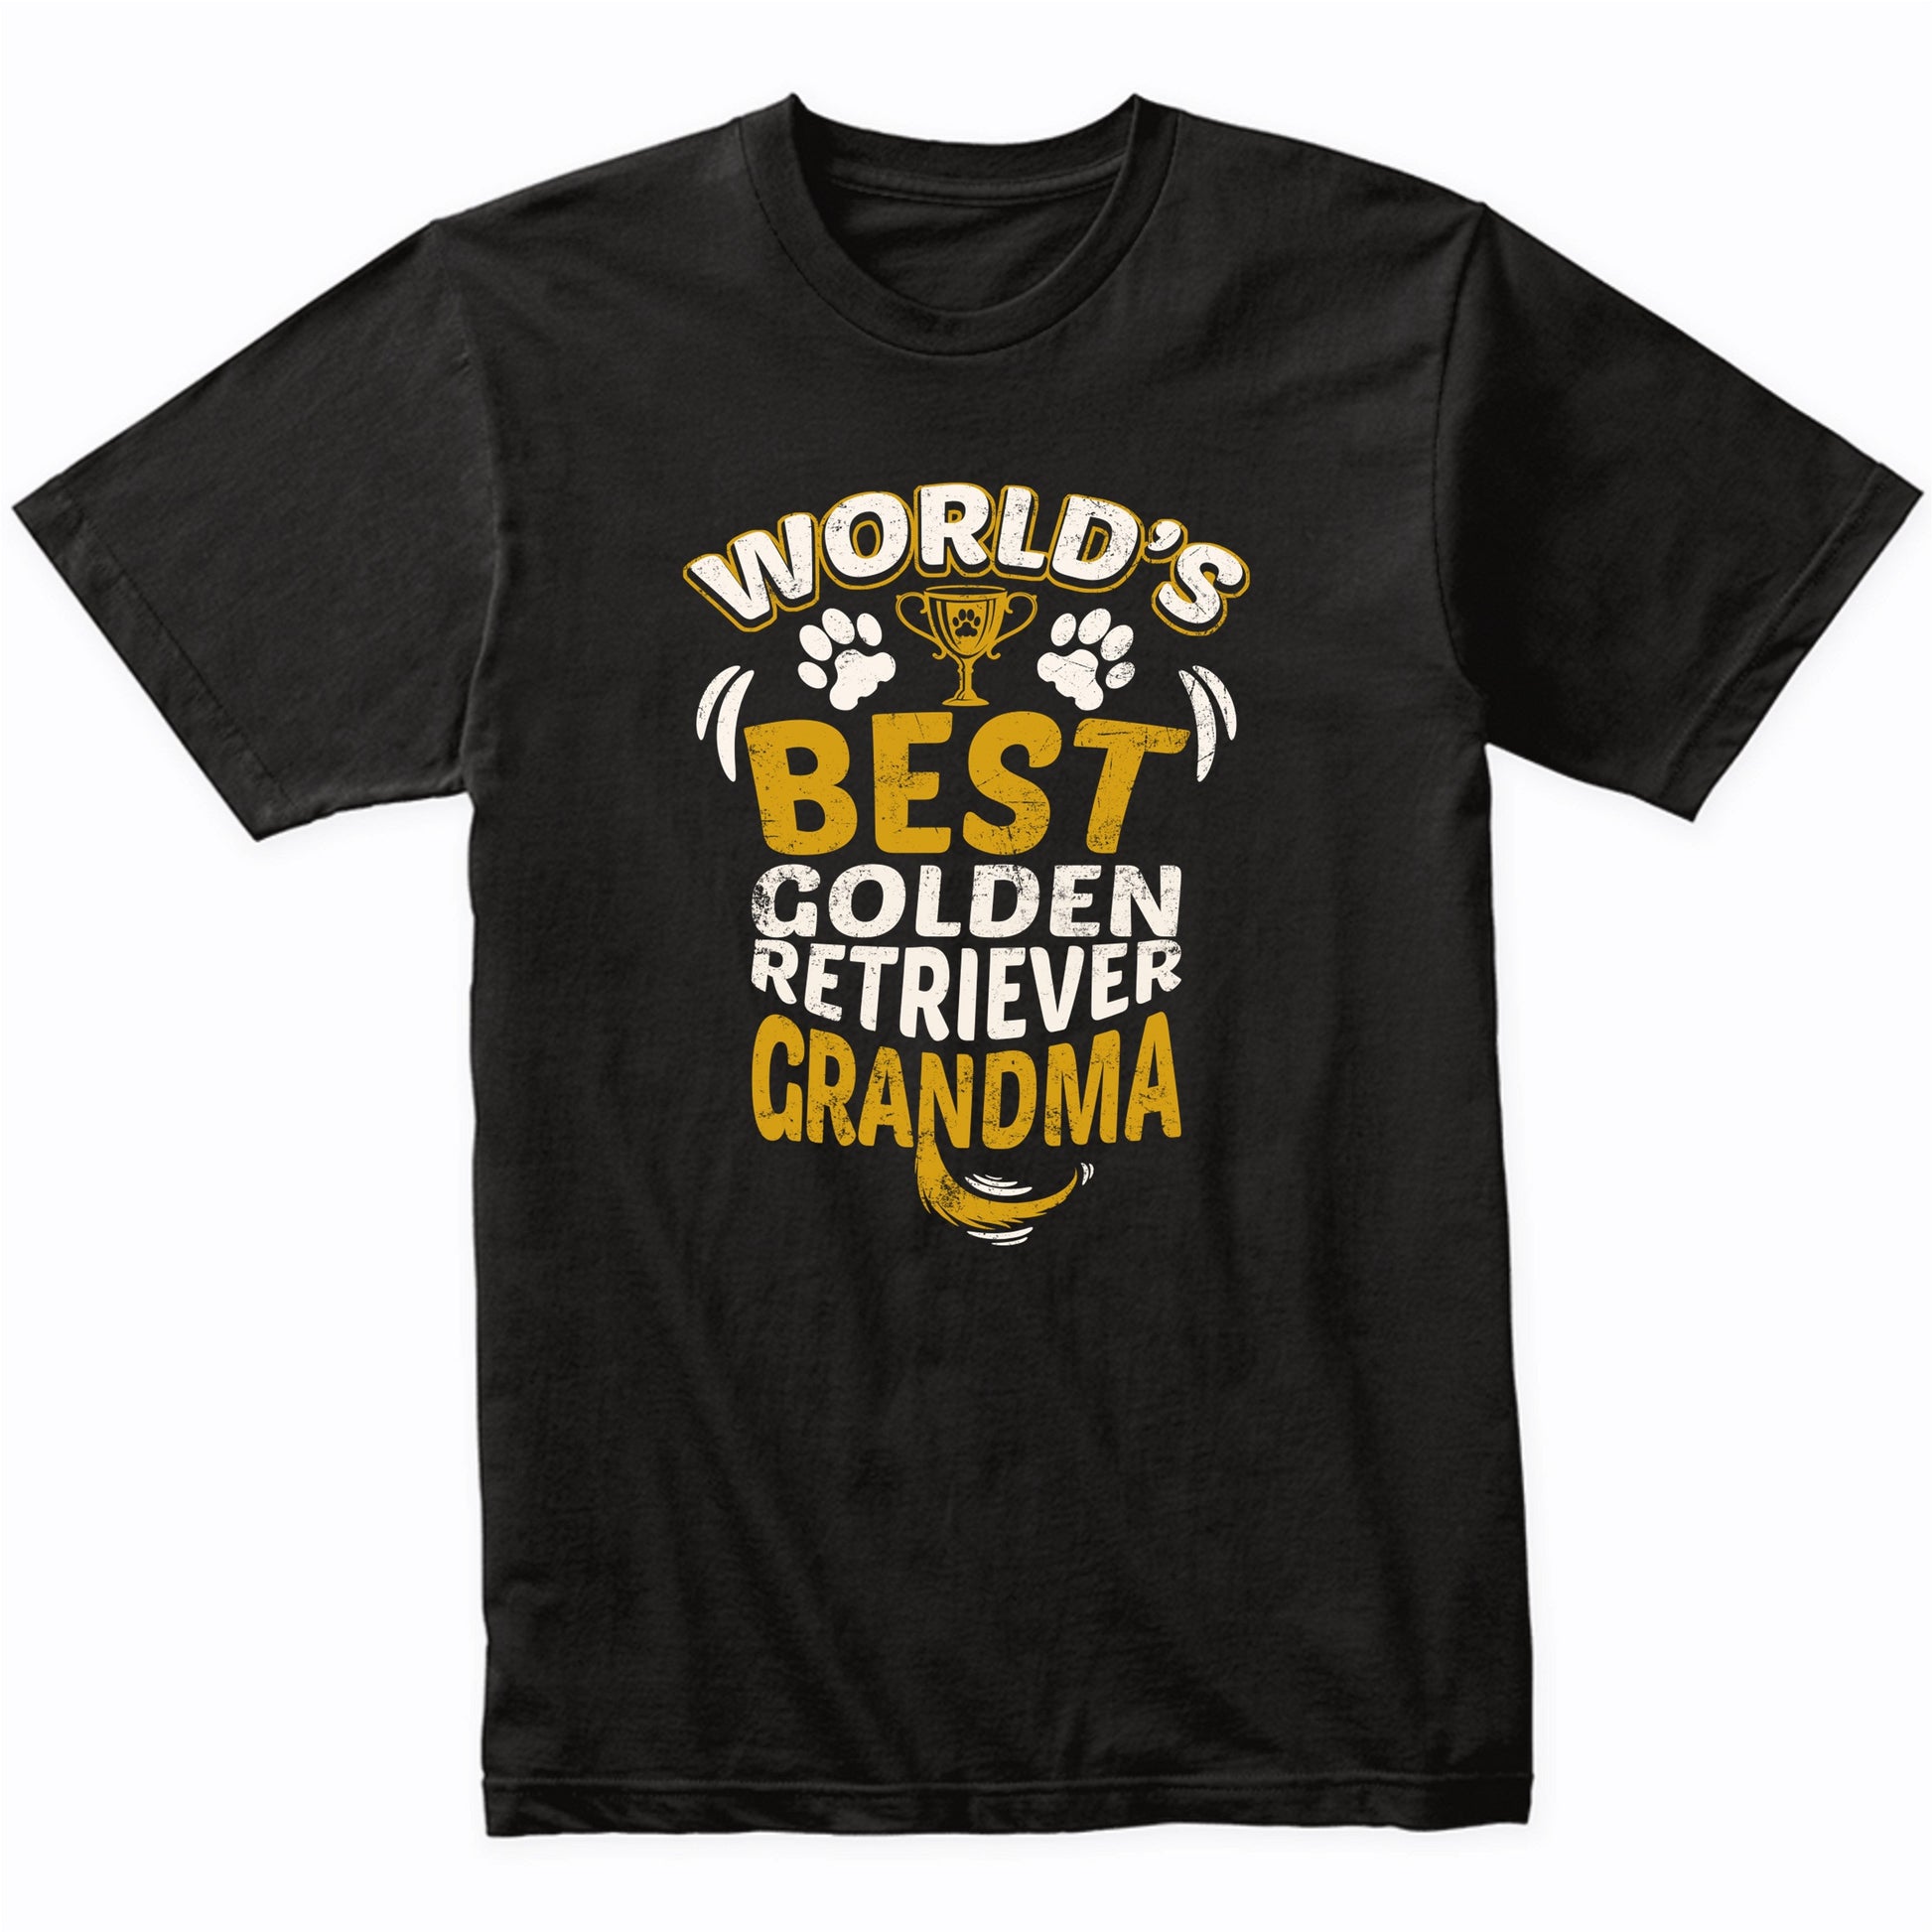 World's Best Golden Retriever Grandma Graphic T-Shirt